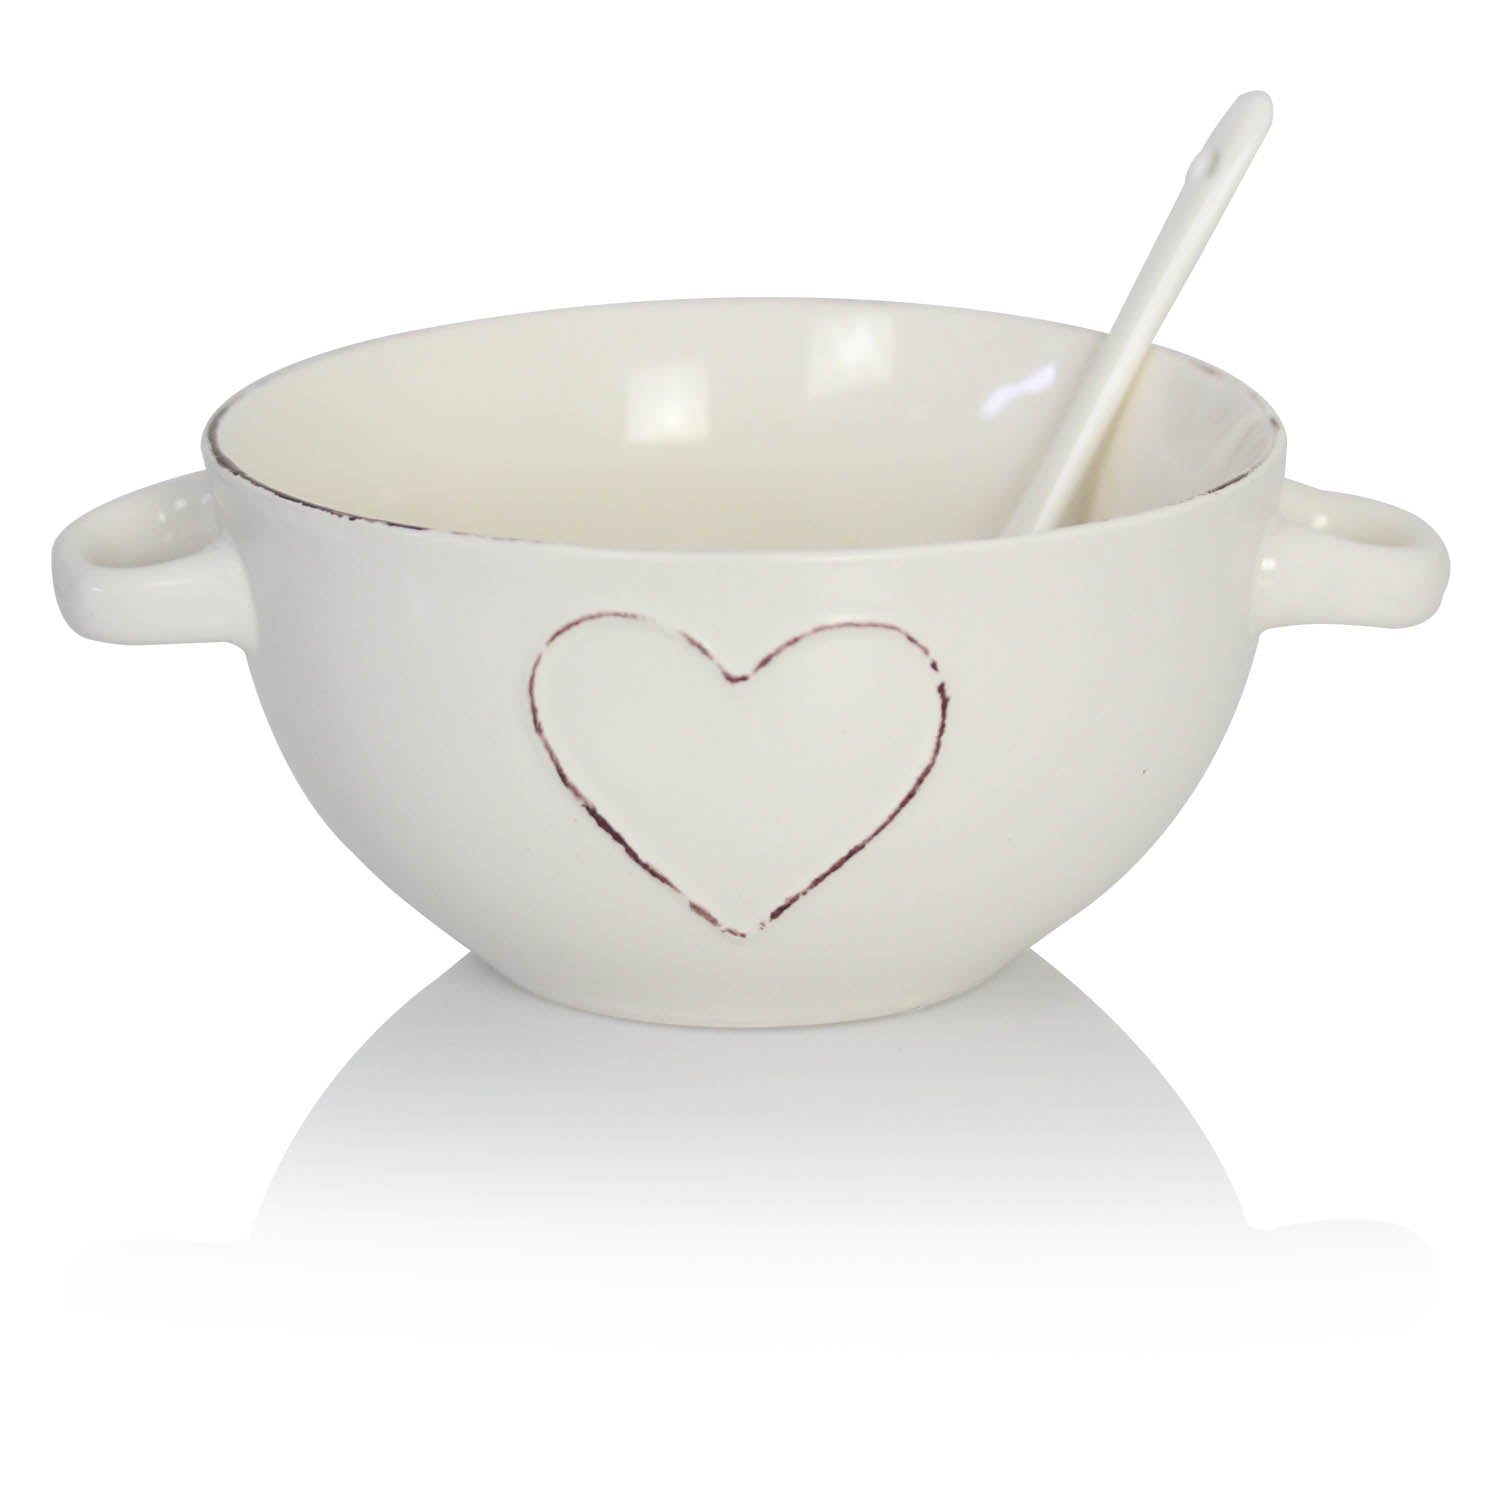 Cream Stoneware Heart Serving Bowl w/ Handle & Spoon